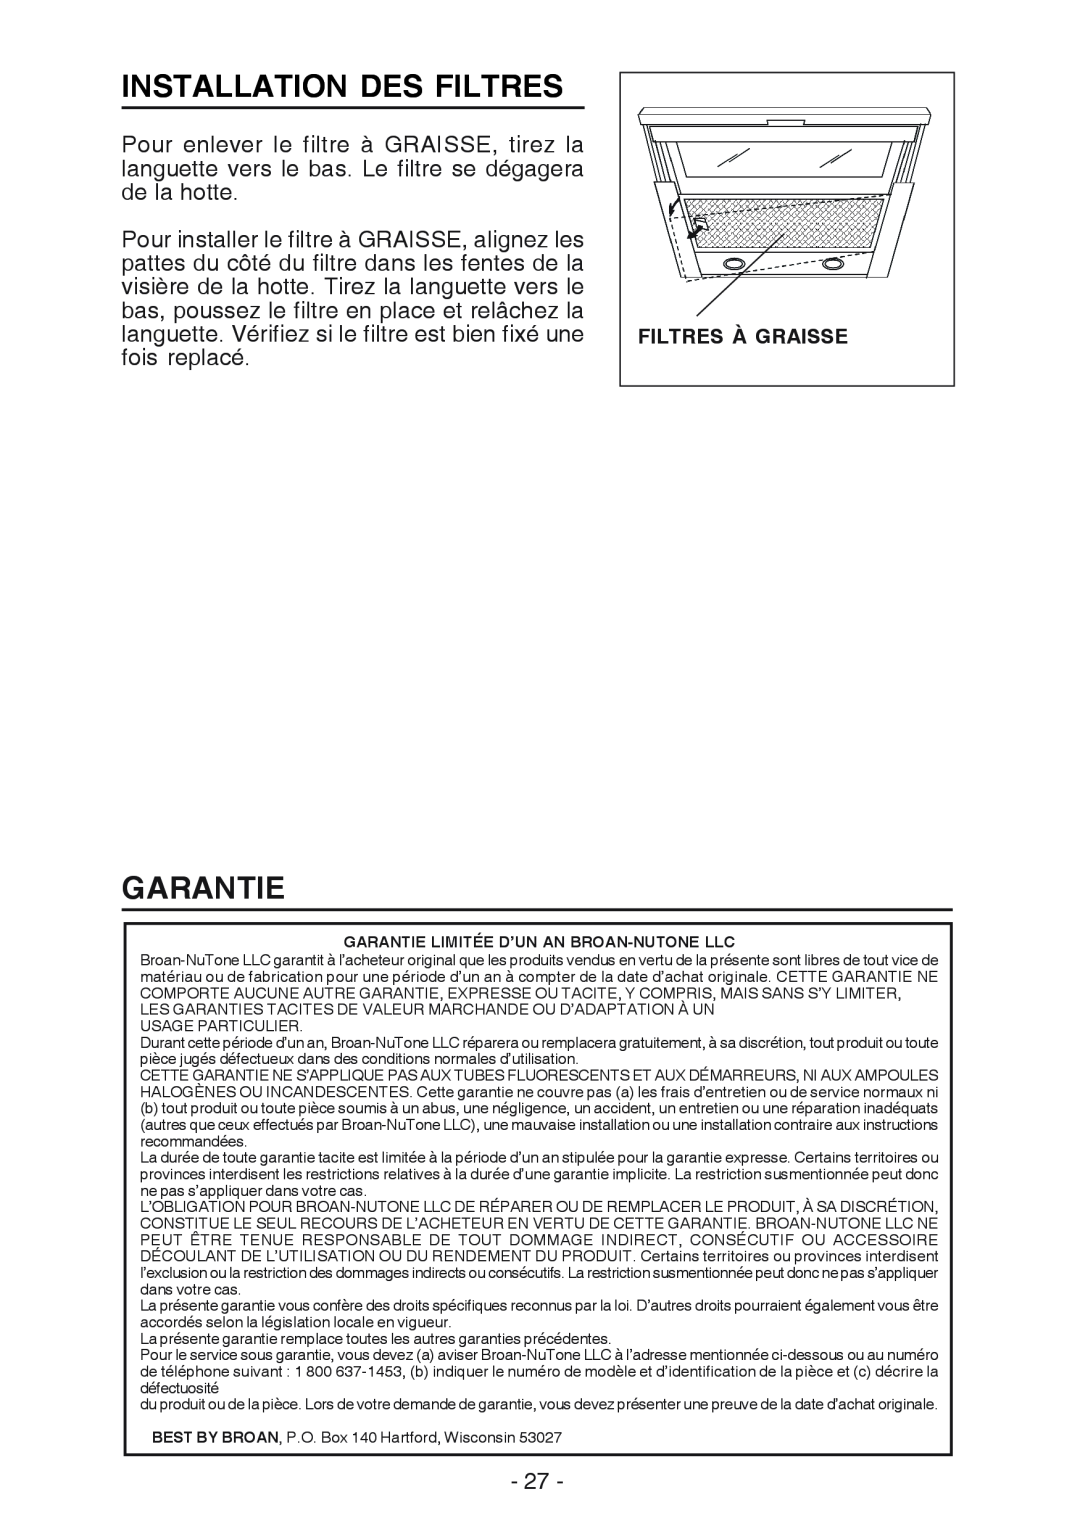 Best U102E manual Installation Des Filtres, Garantie, Filtres À Graisse 